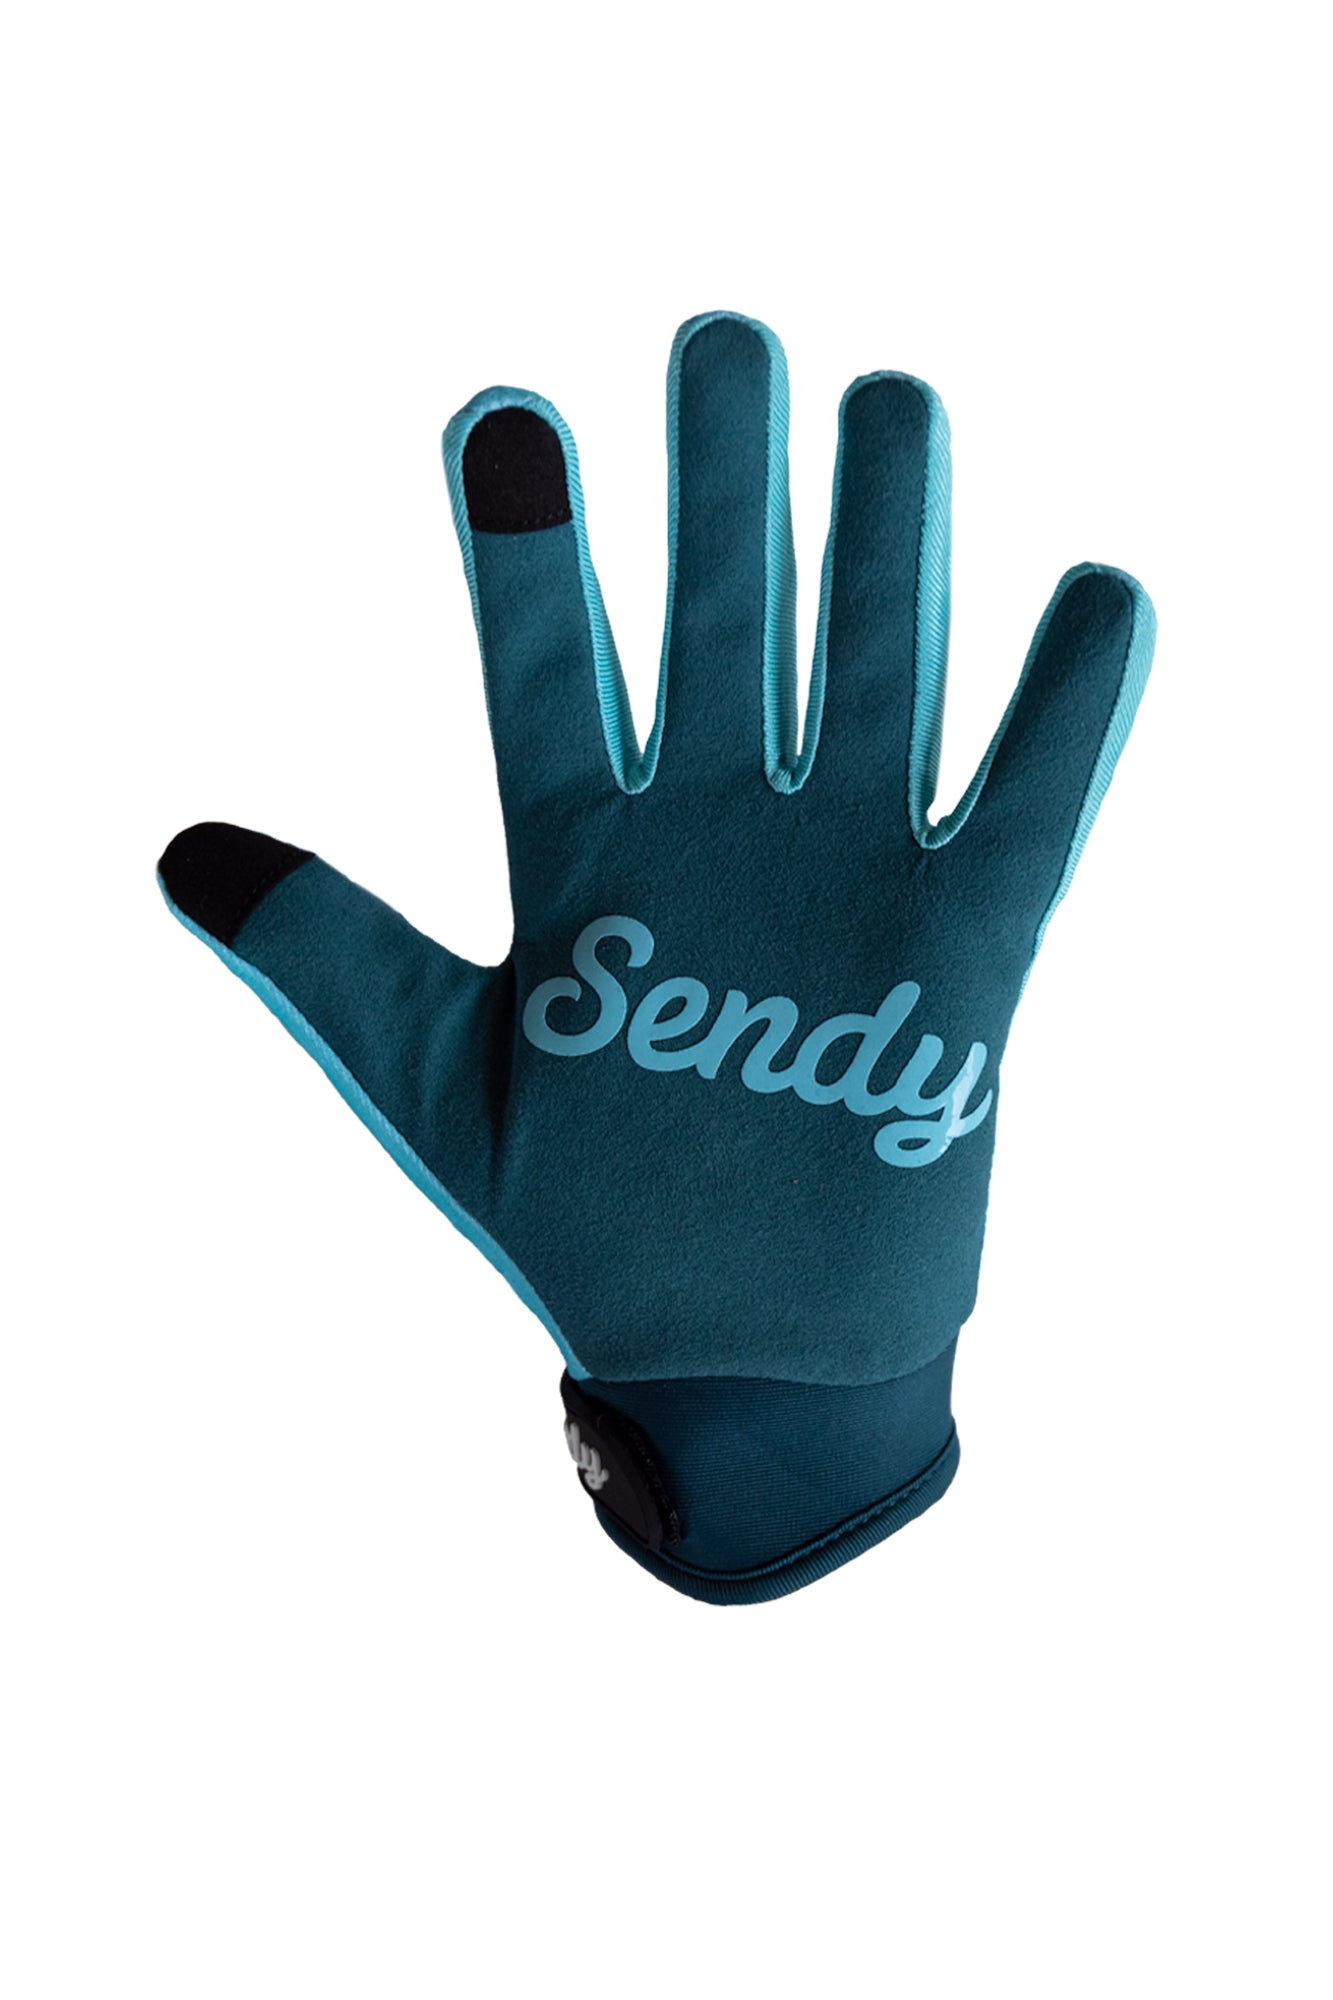 Send It Women's MTB Glove | The Gem